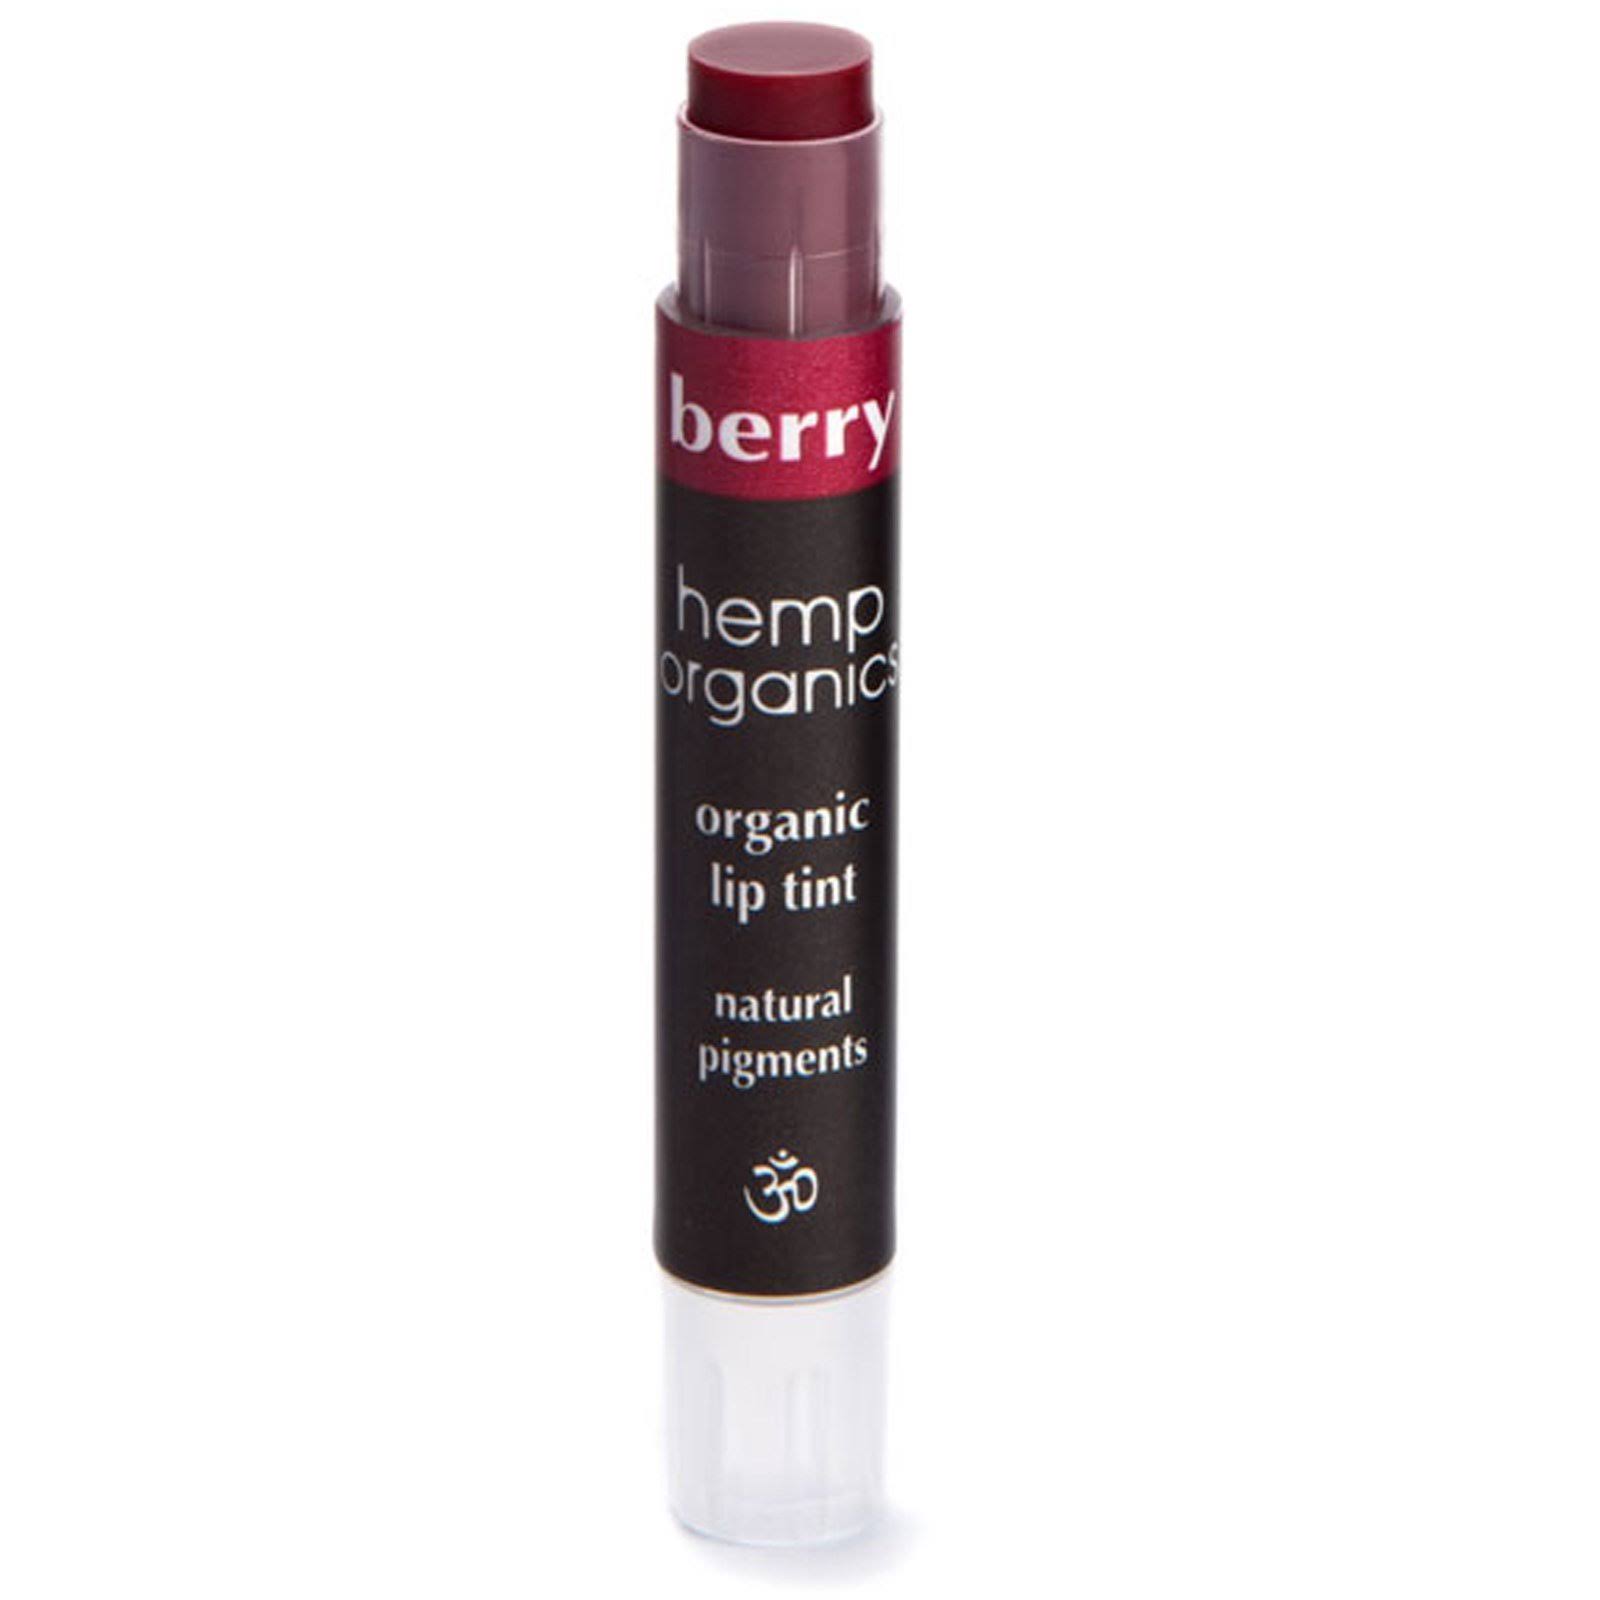 Hemp Organic Lip Tint - Berry, 2.5g